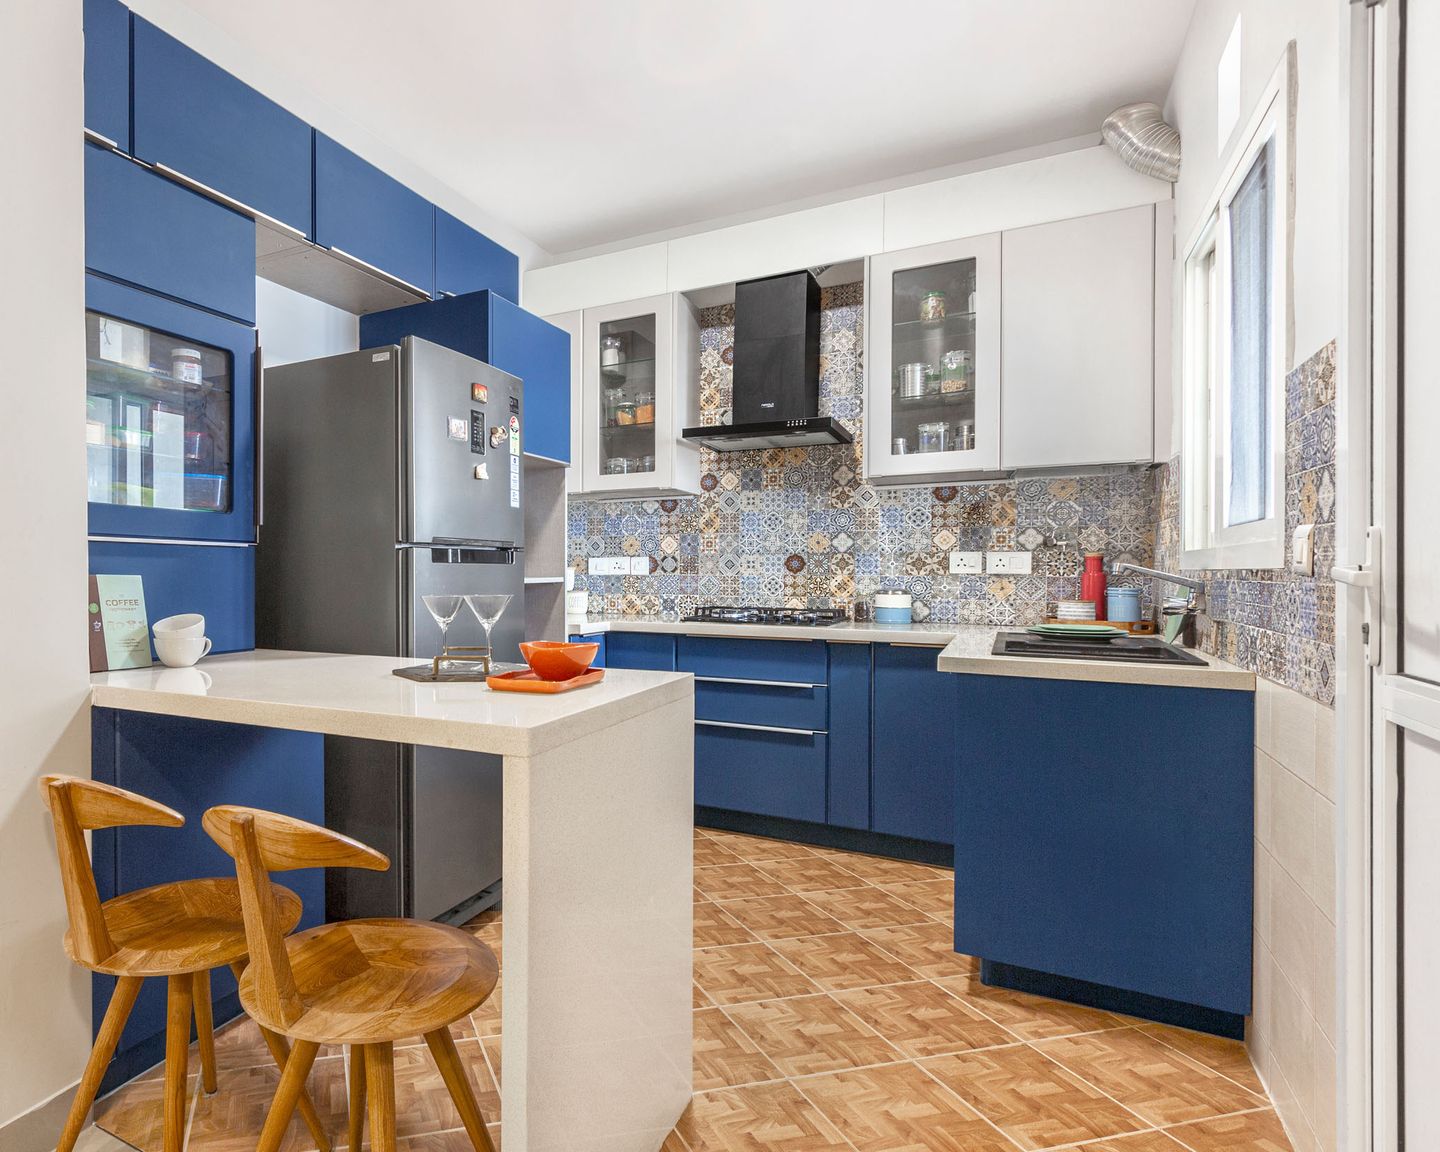 Blue And White Modular Island Kitchen Design With Patterned Backsplash - Livspace